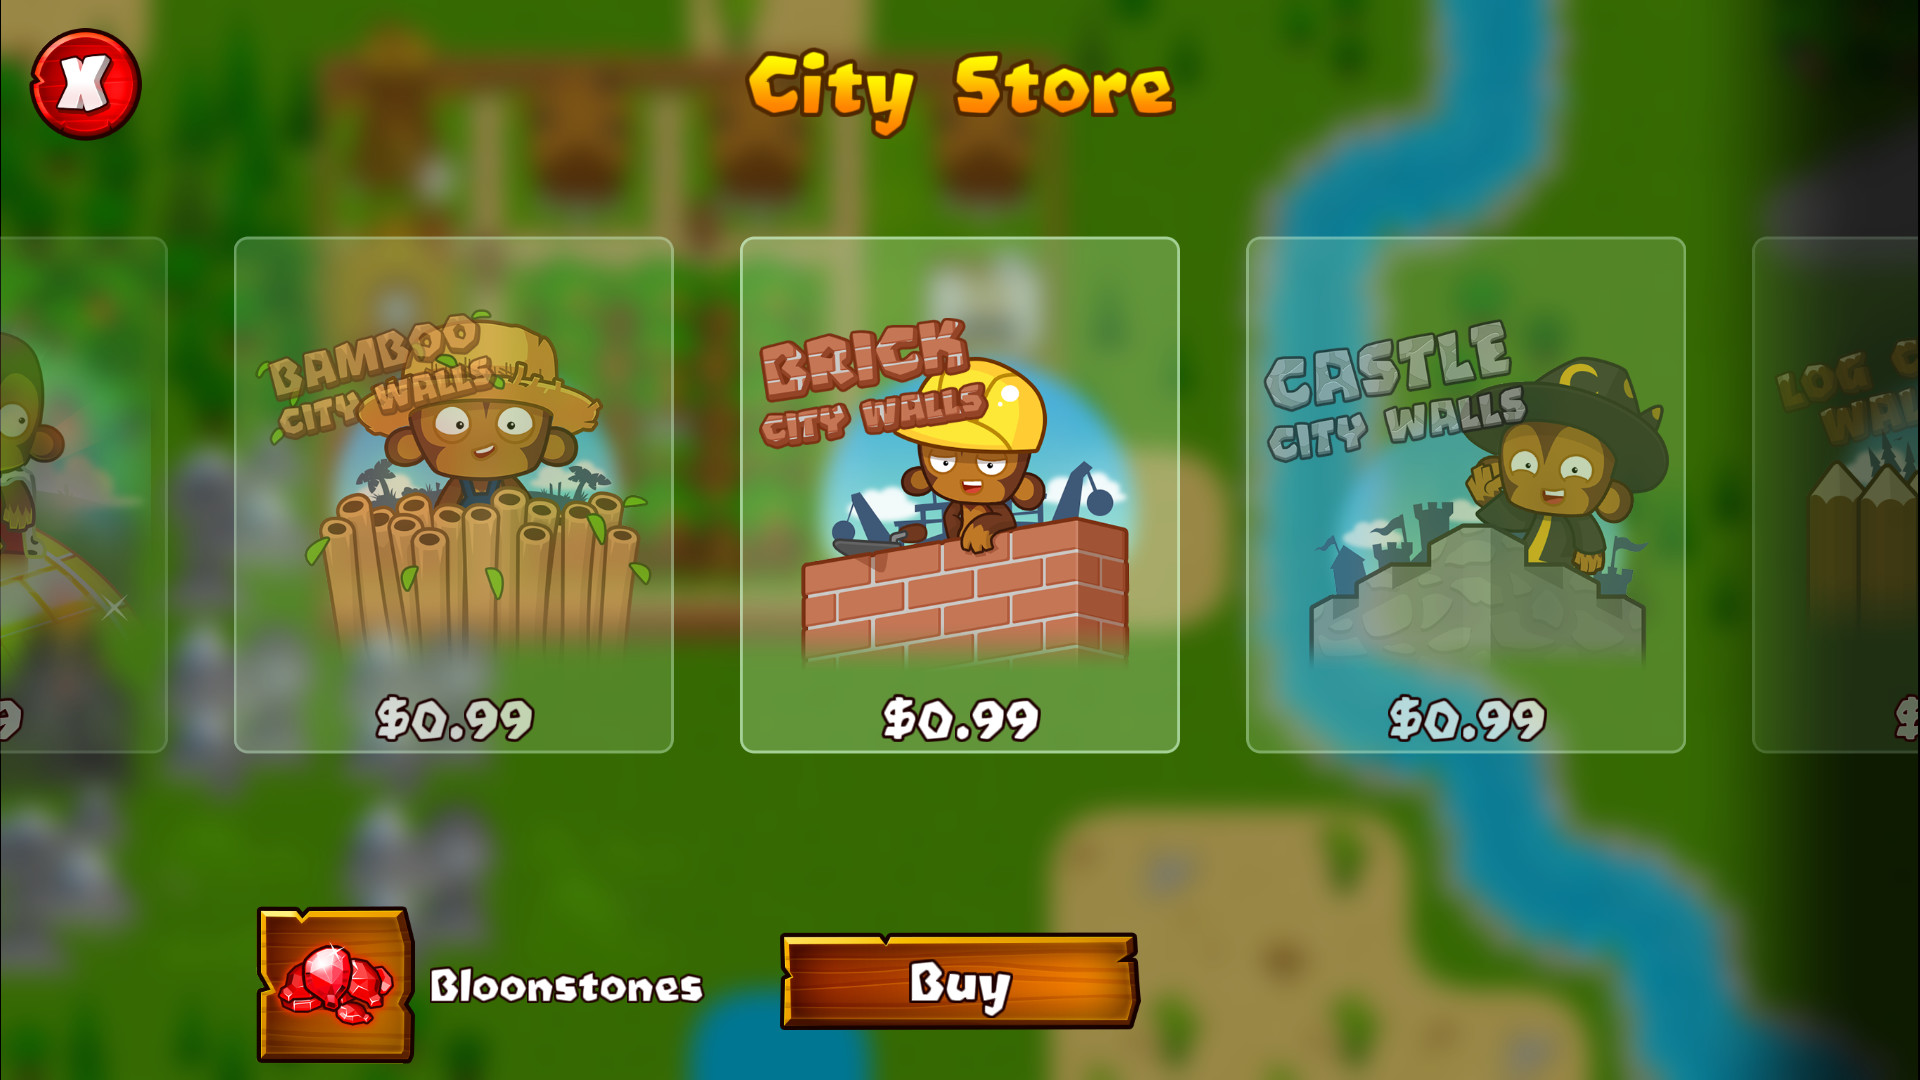 Bloons Monkey City - Brick City Walls Featured Screenshot #1